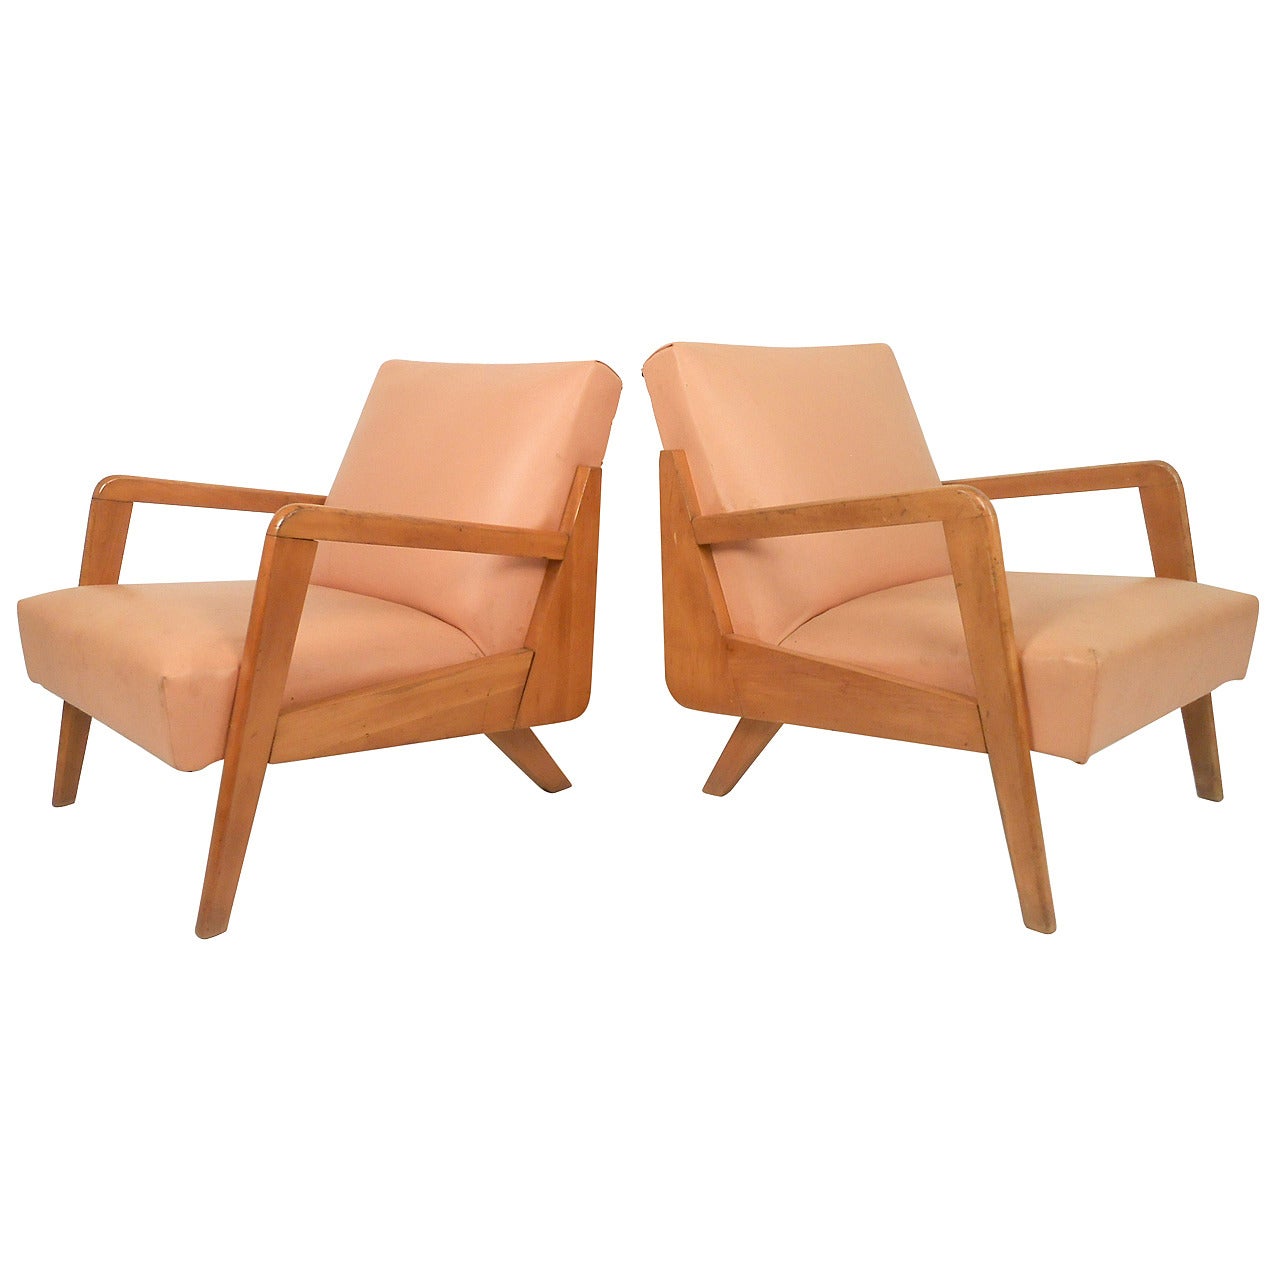 Atomic Modern Lounge Chairs, a Pair